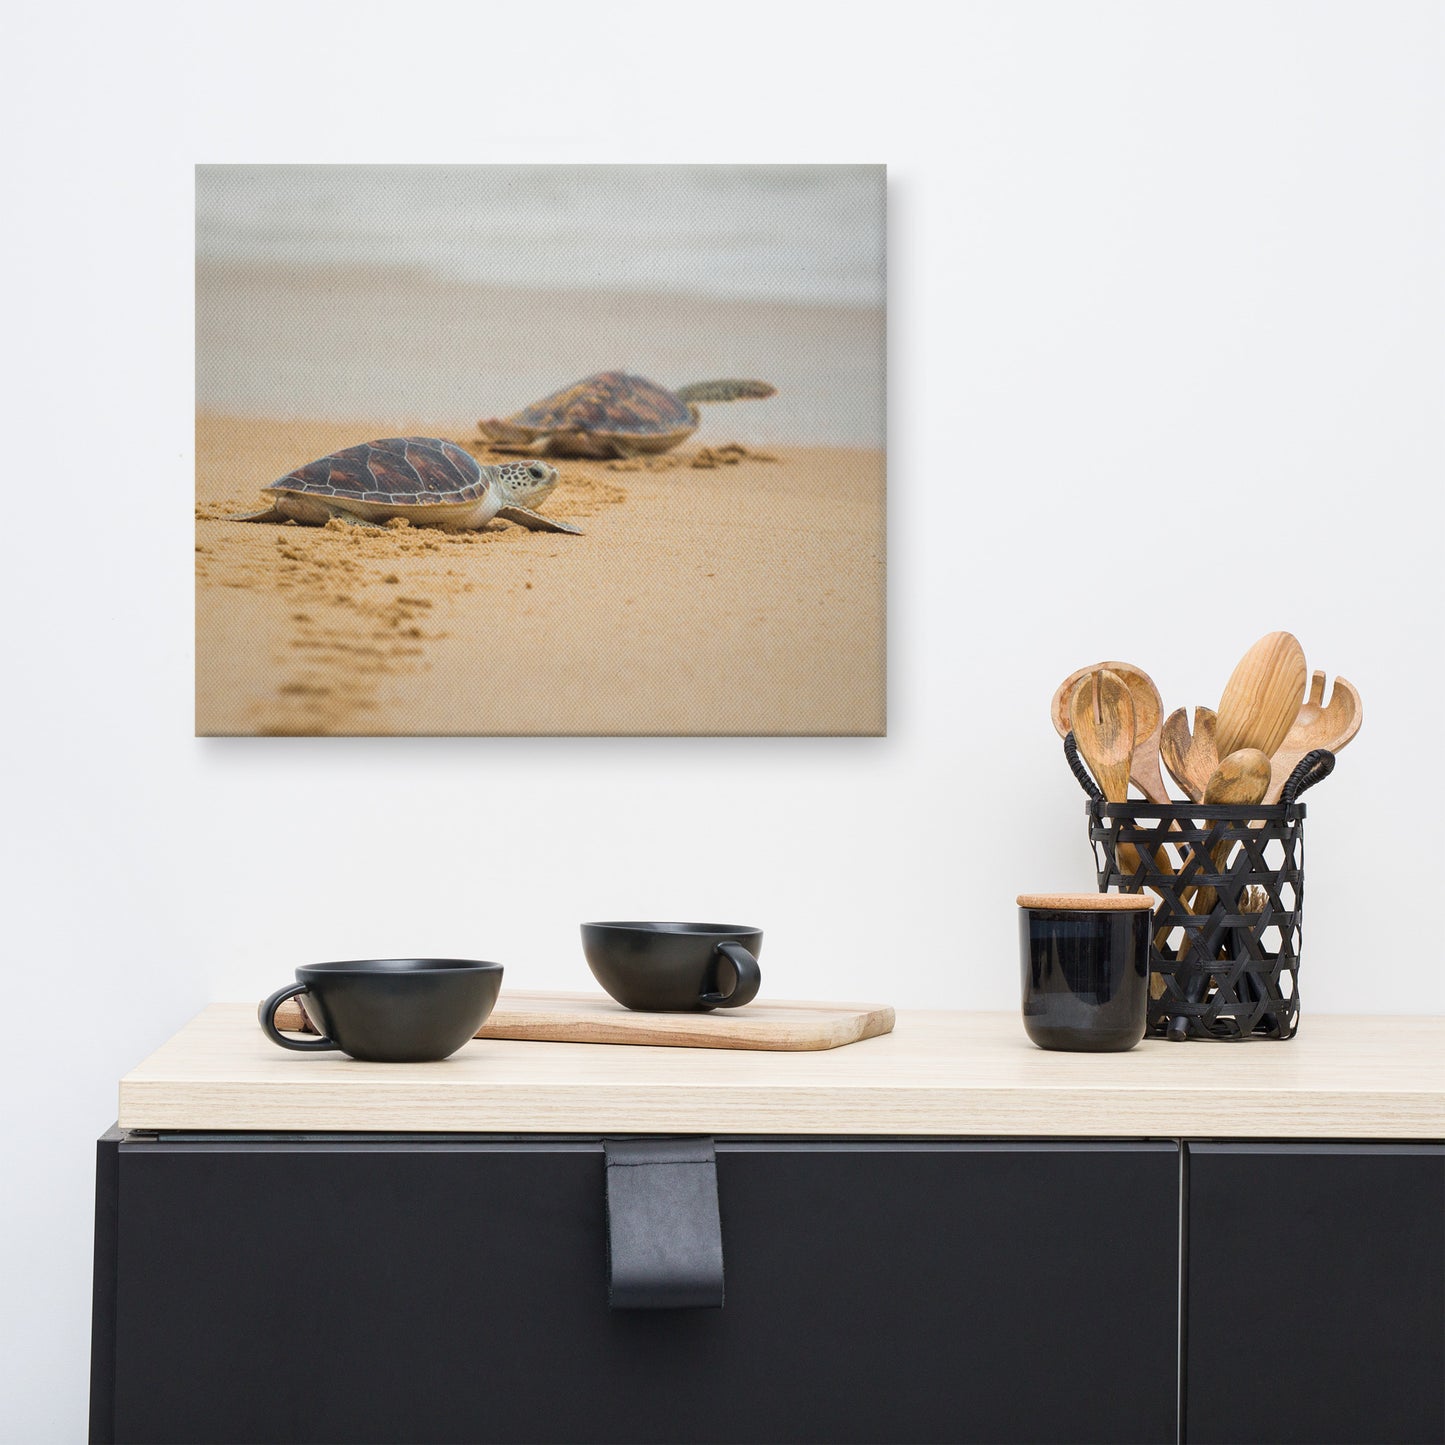 Modern Dining Room Art: Hawksbill Sea Turtle Hatchlings at the Shore - Coastal / Wildlife / Marine Animal / Nature Photograph Canvas Wall Art Print - Artwork